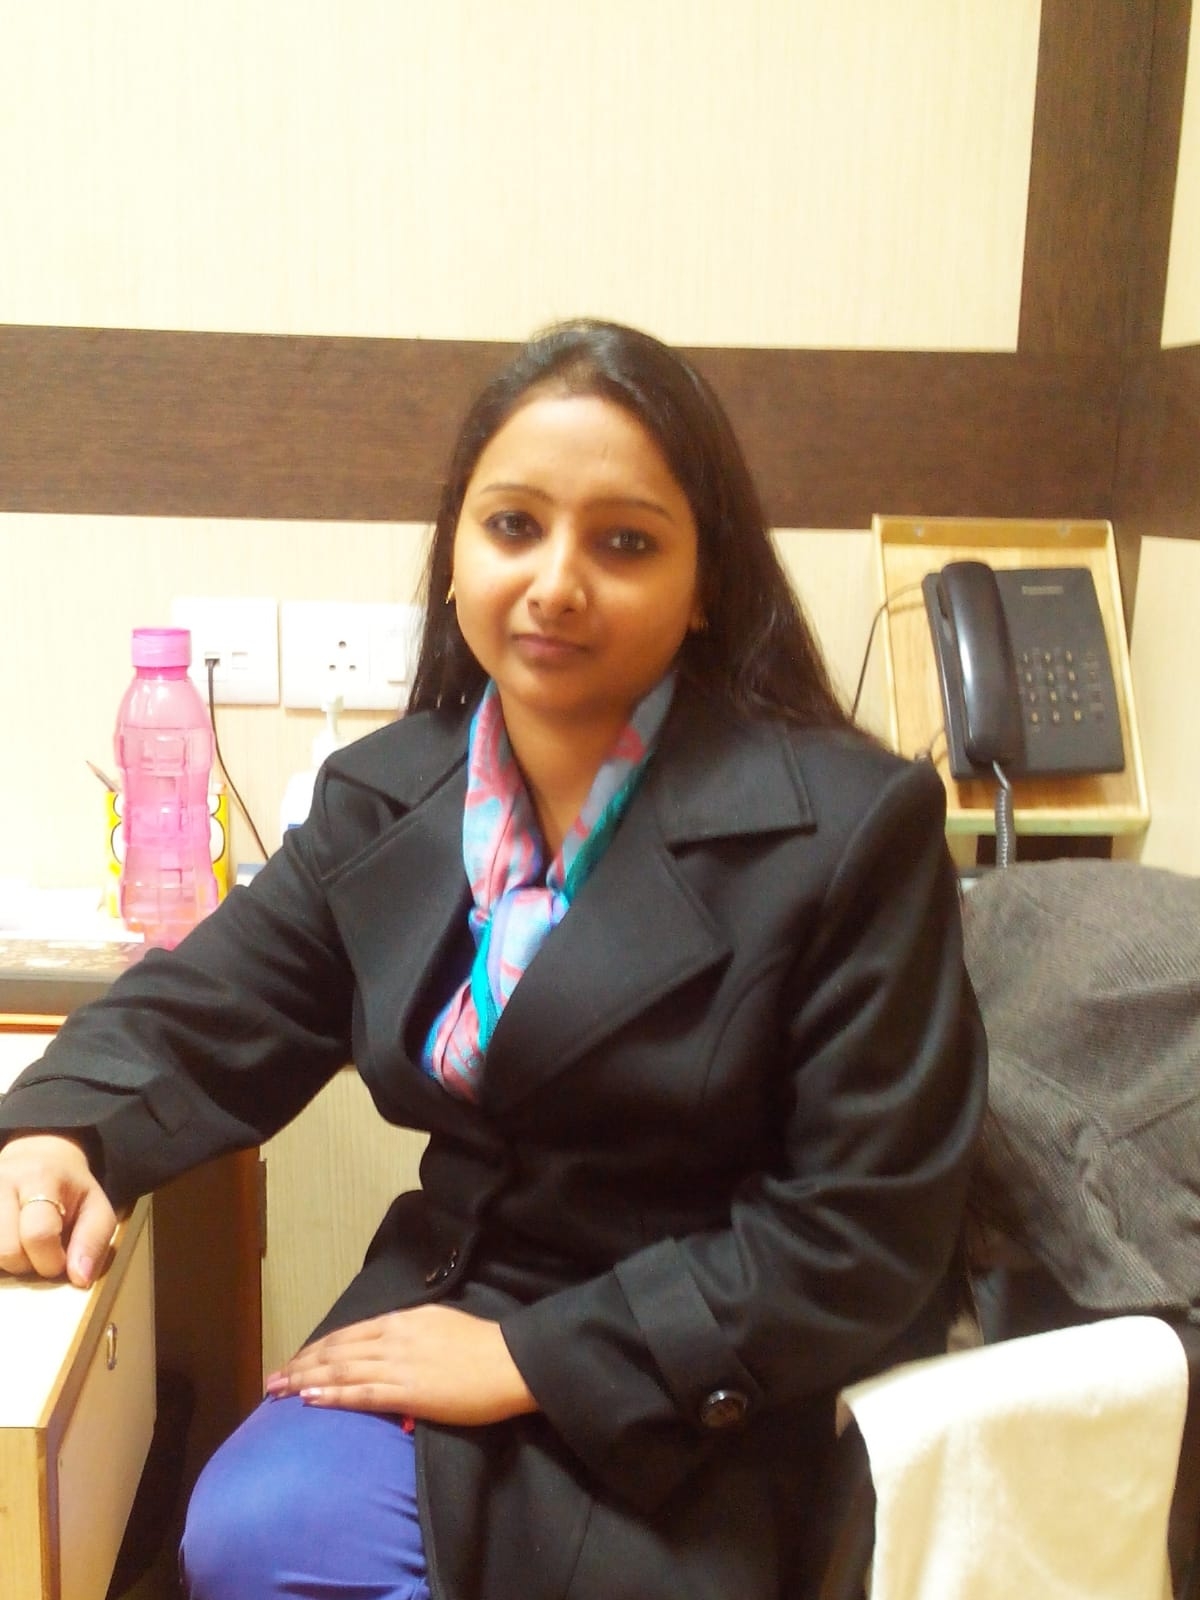 Dr. Swati Aggarwal